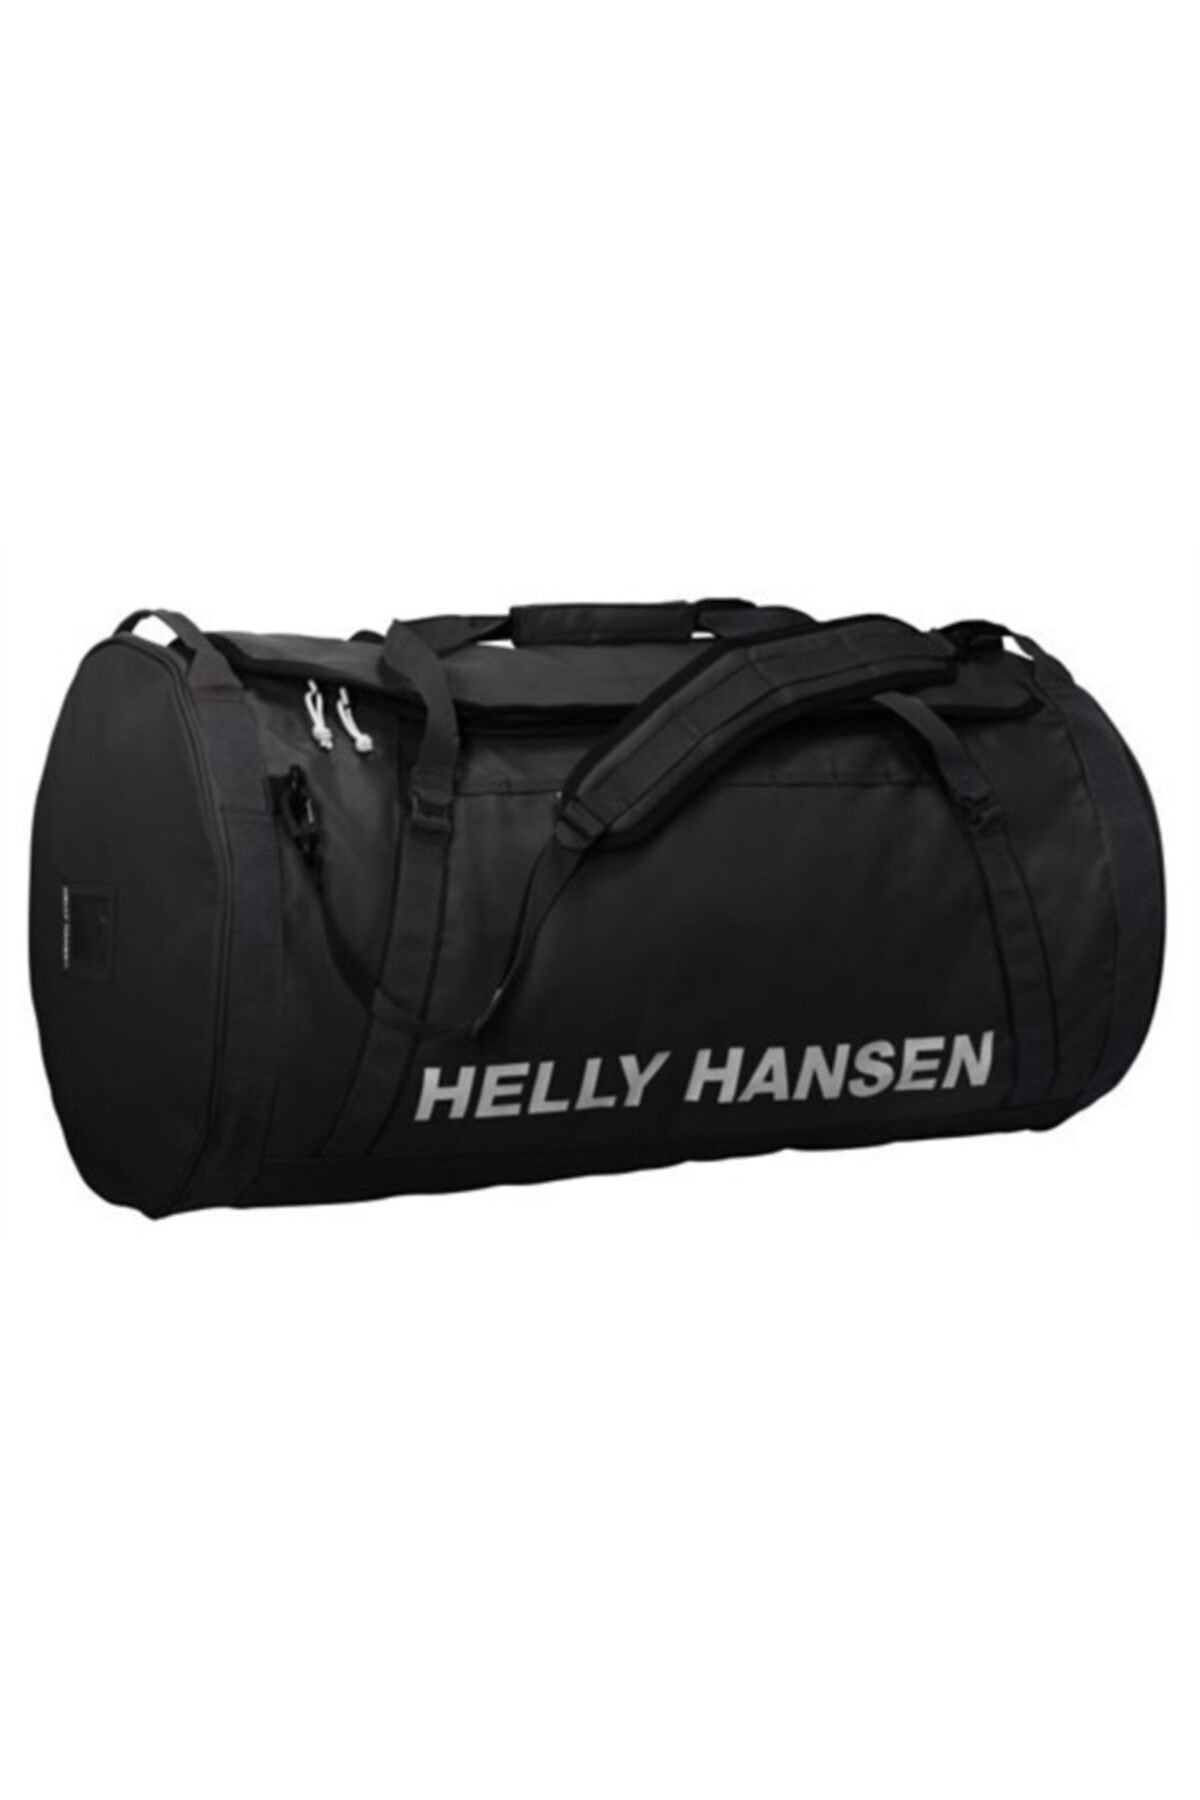 Helly Hansen Duffel Bag 2 30l Siyah Spor Çanta